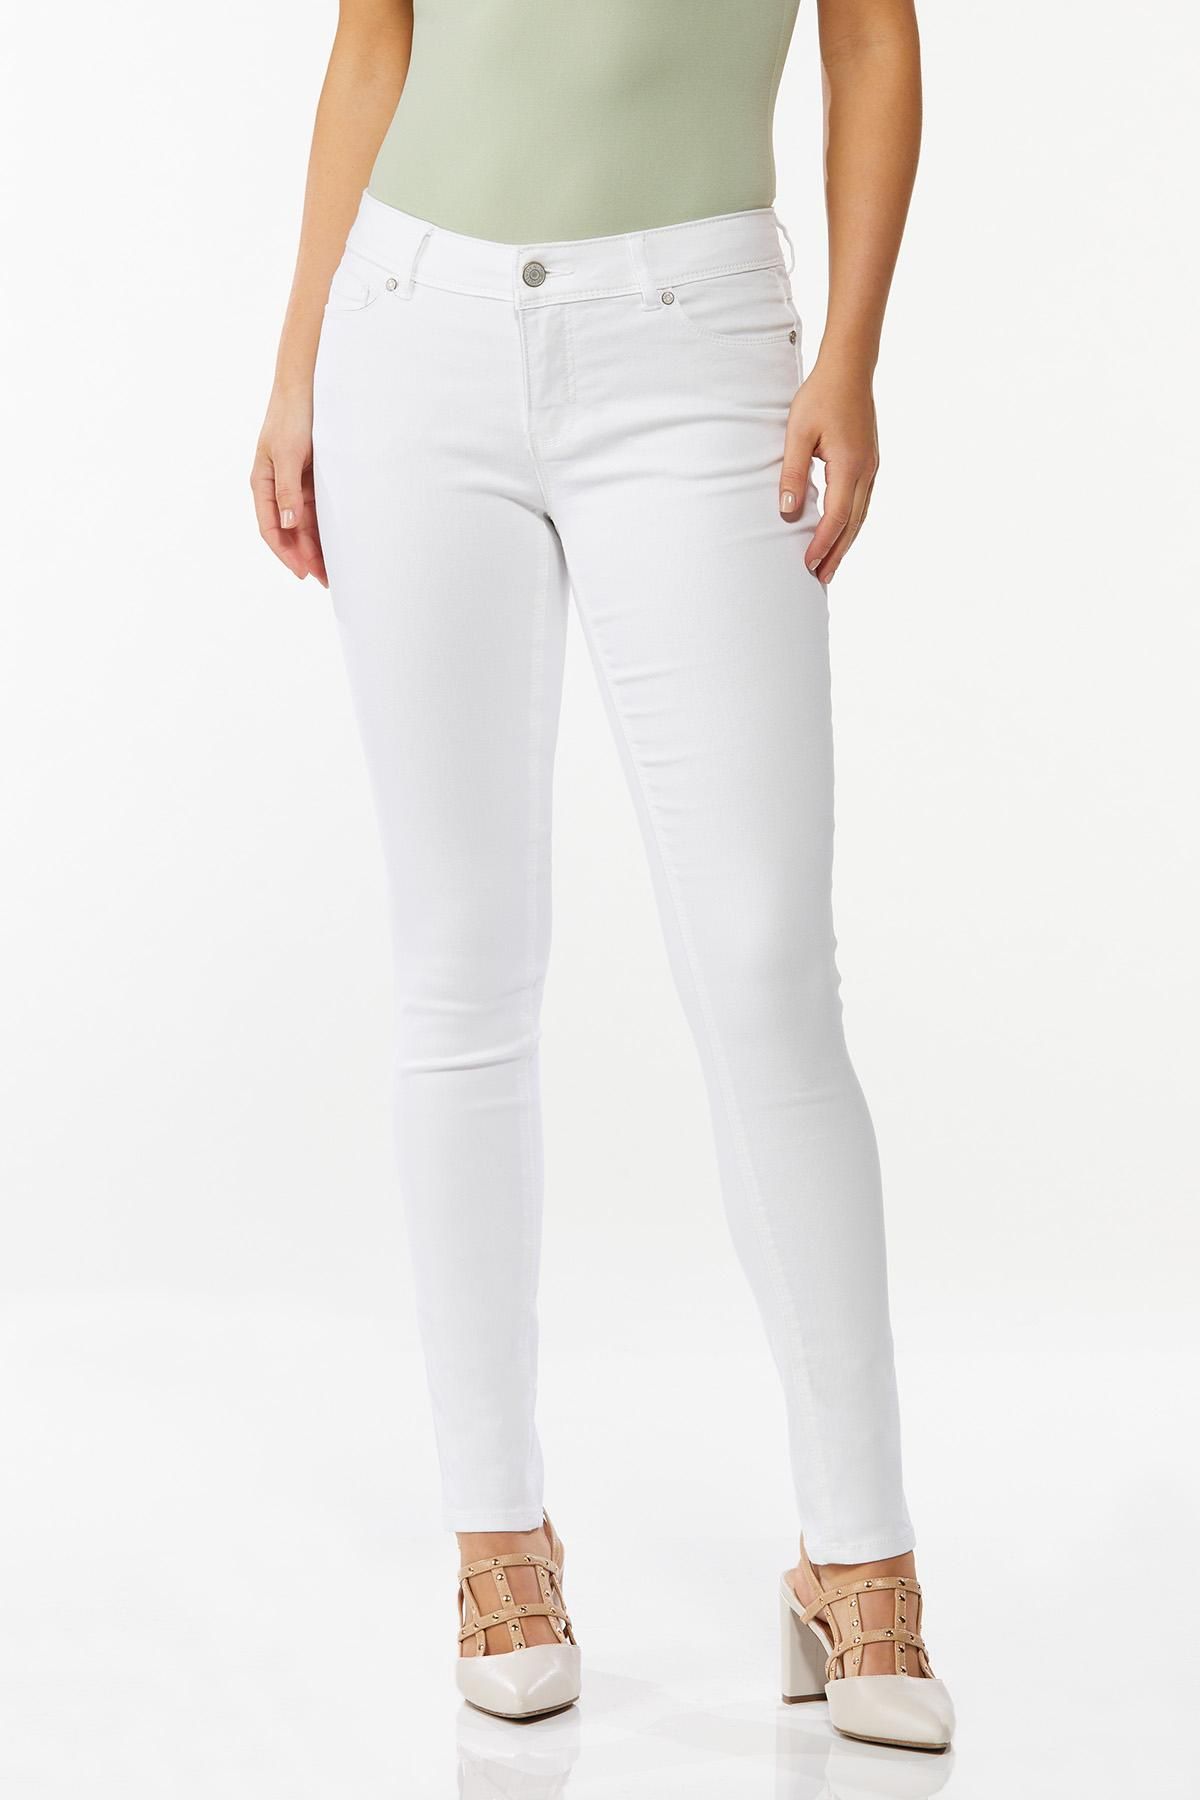 Petite White Skinny Jeans | Cato Fashions